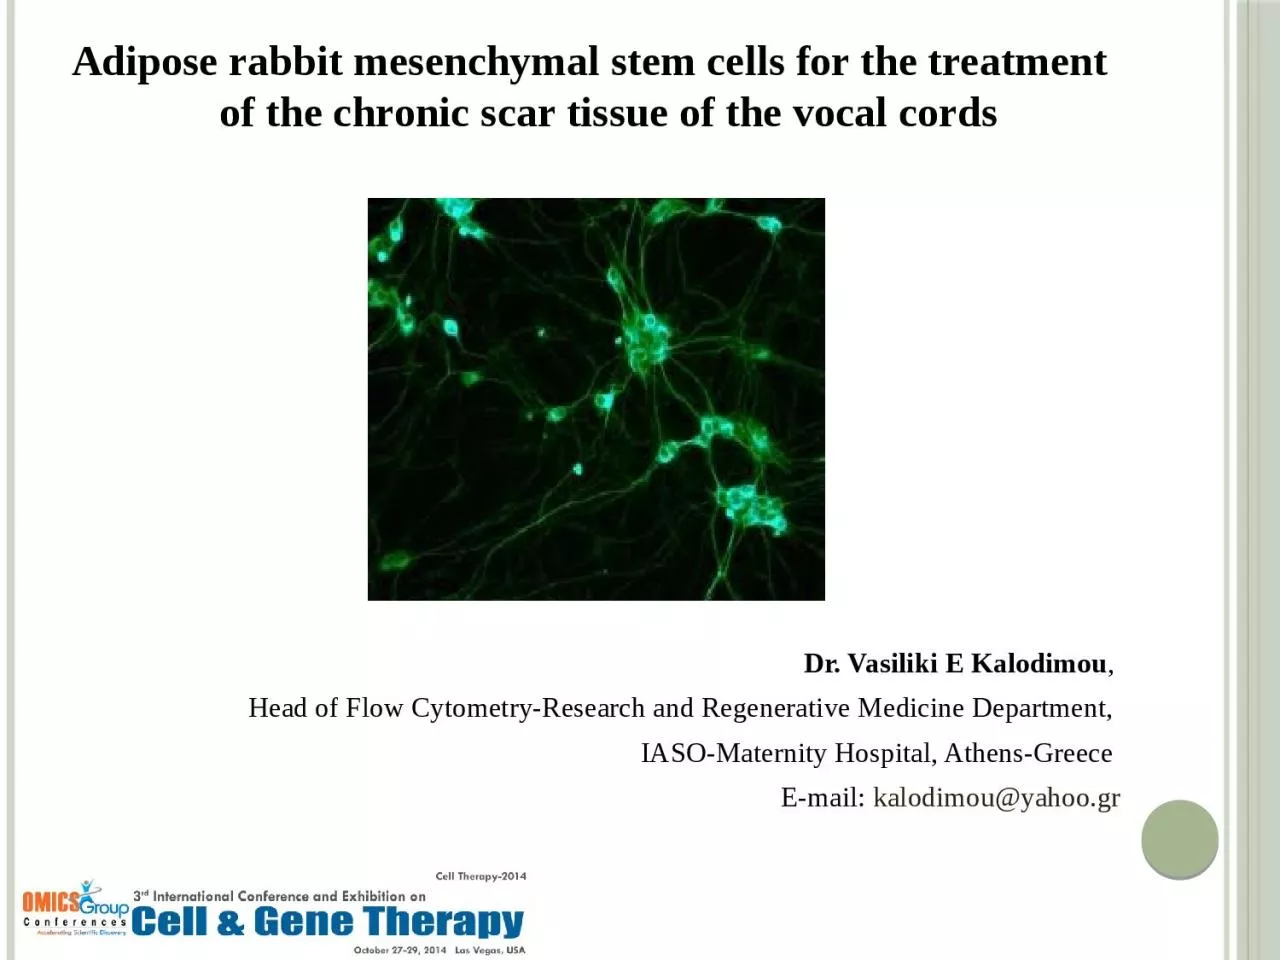 Adipose rabbit mesenchymal stem cells for the treatment of the chronic scar tissue of